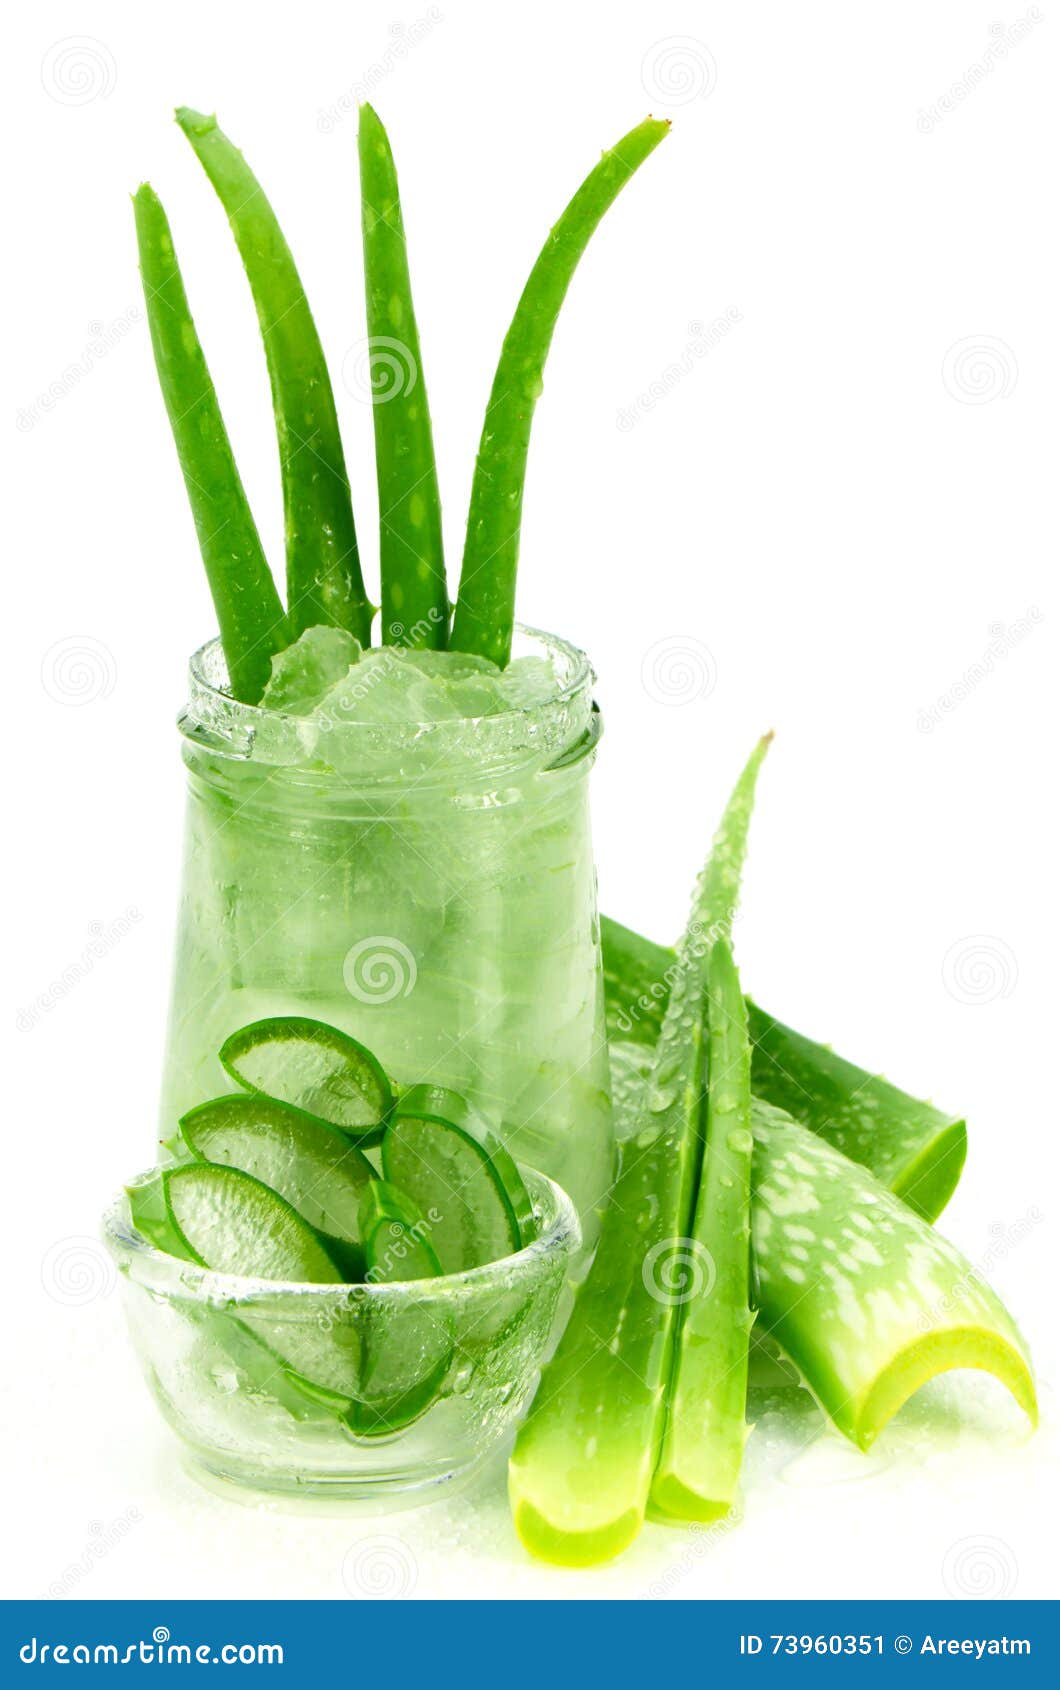 Aloe Vera Gel And Cut Aloe Vera Leaves Stock Image Image Of